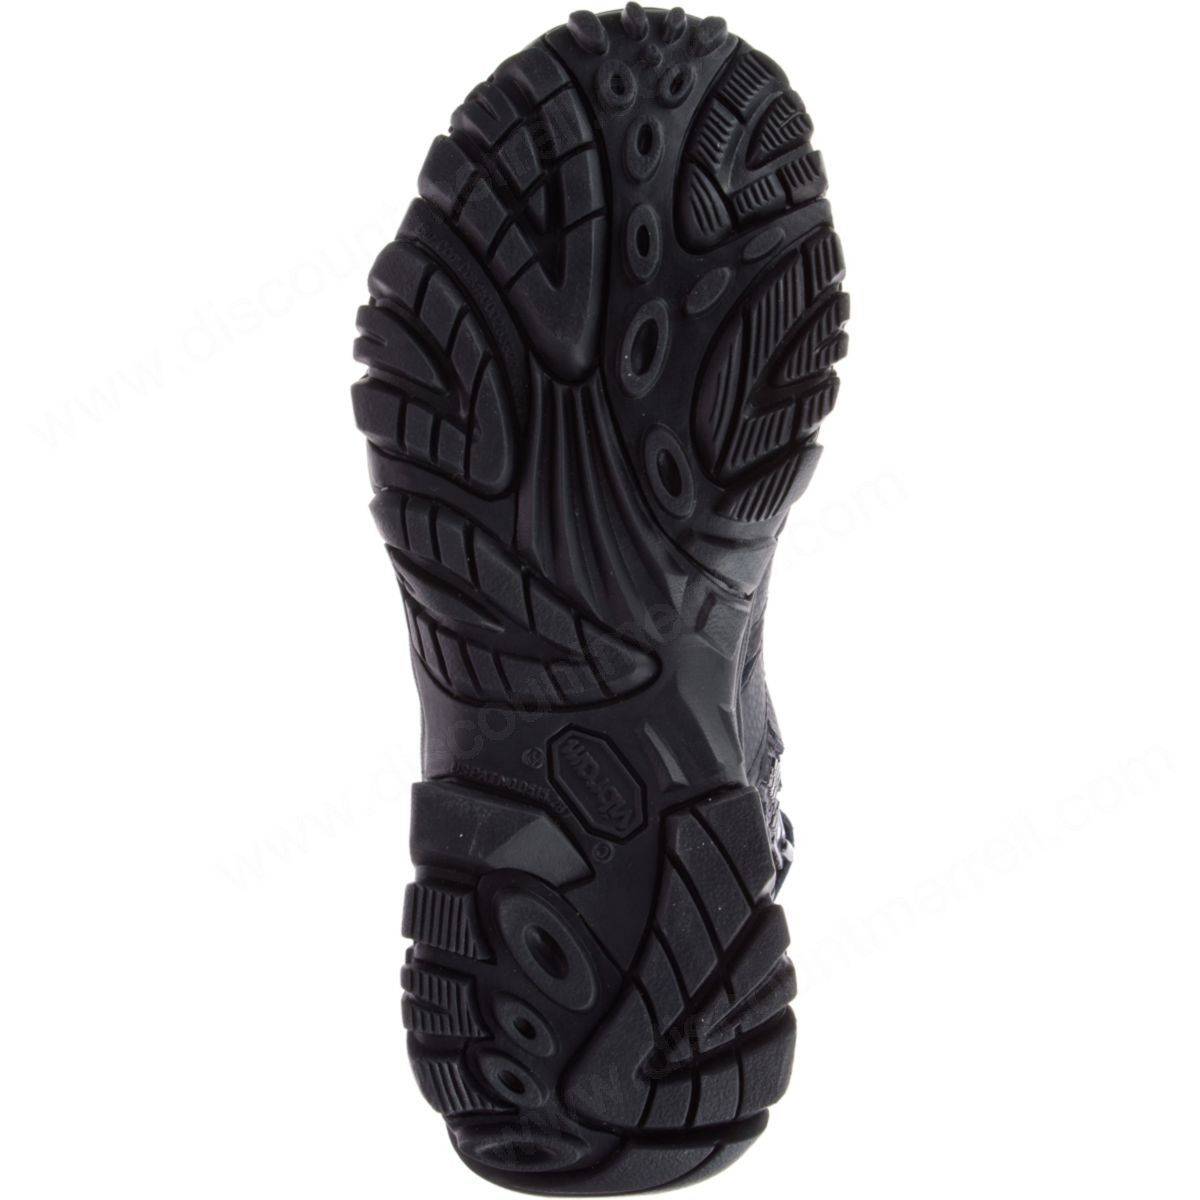 Merrell Man's Moab " Tactical Waterproof Boot Wide Black - -1